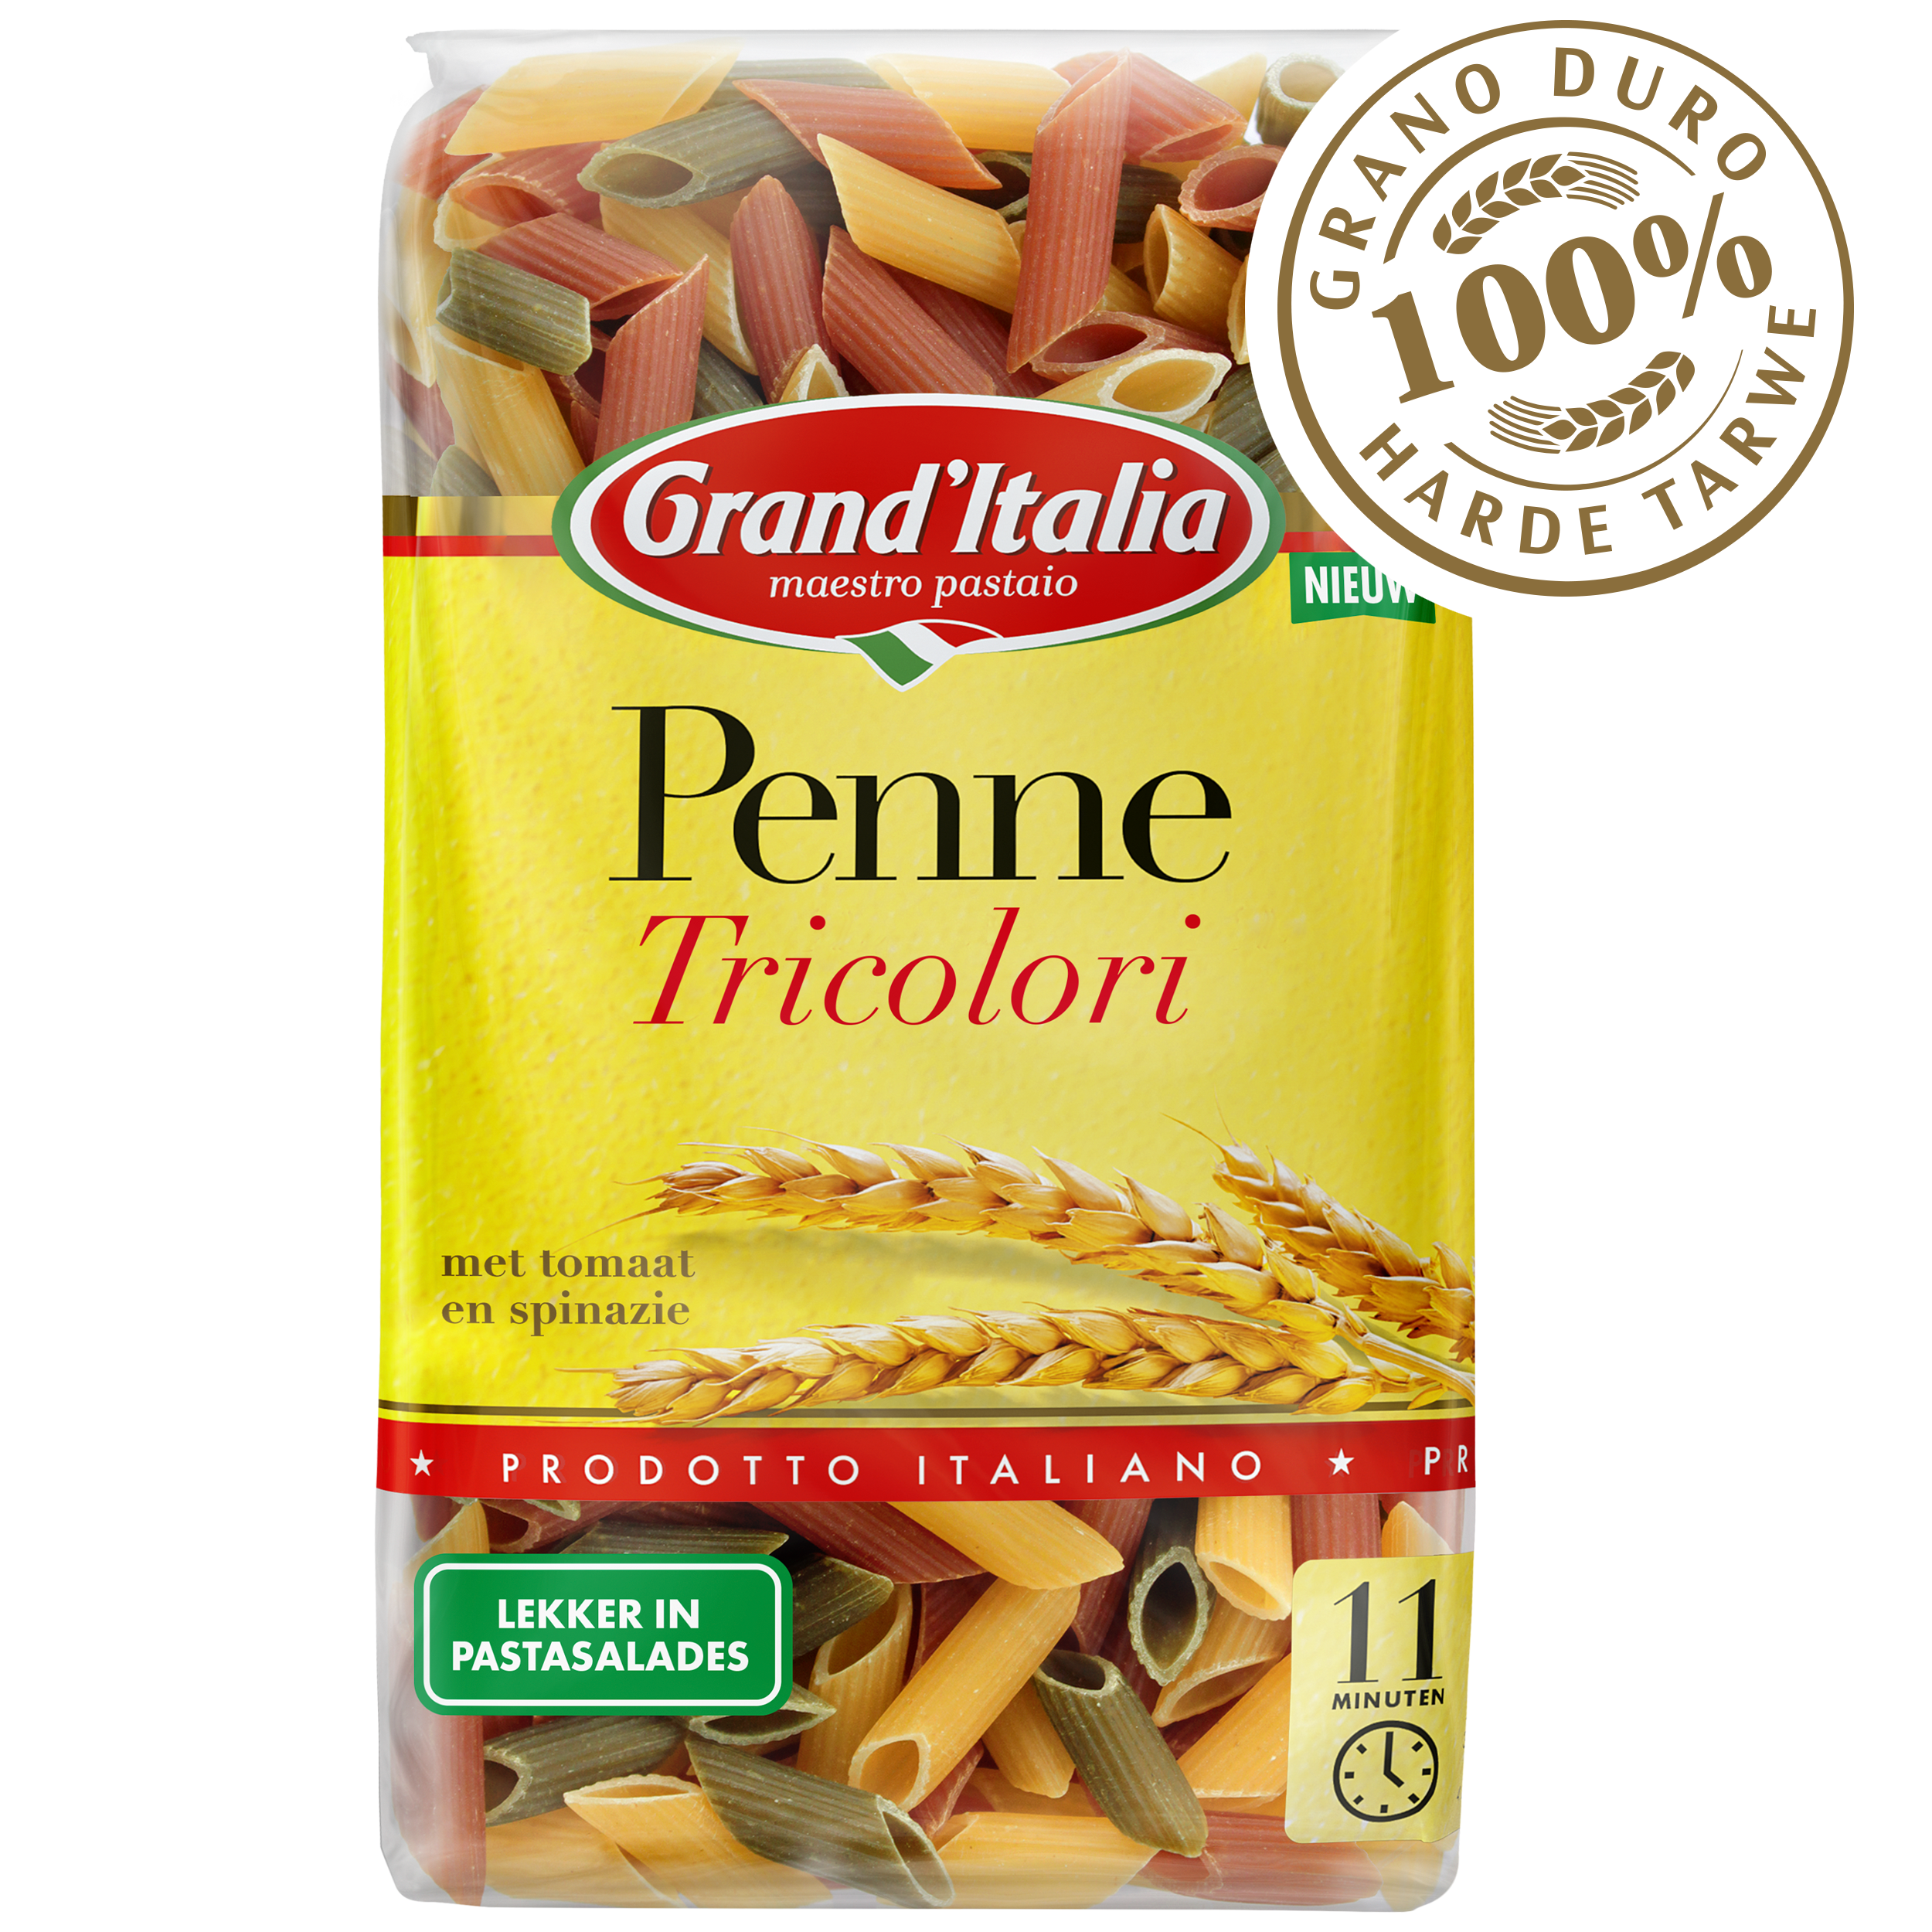 Grand'Italia Penne Tricolori pasta - claim